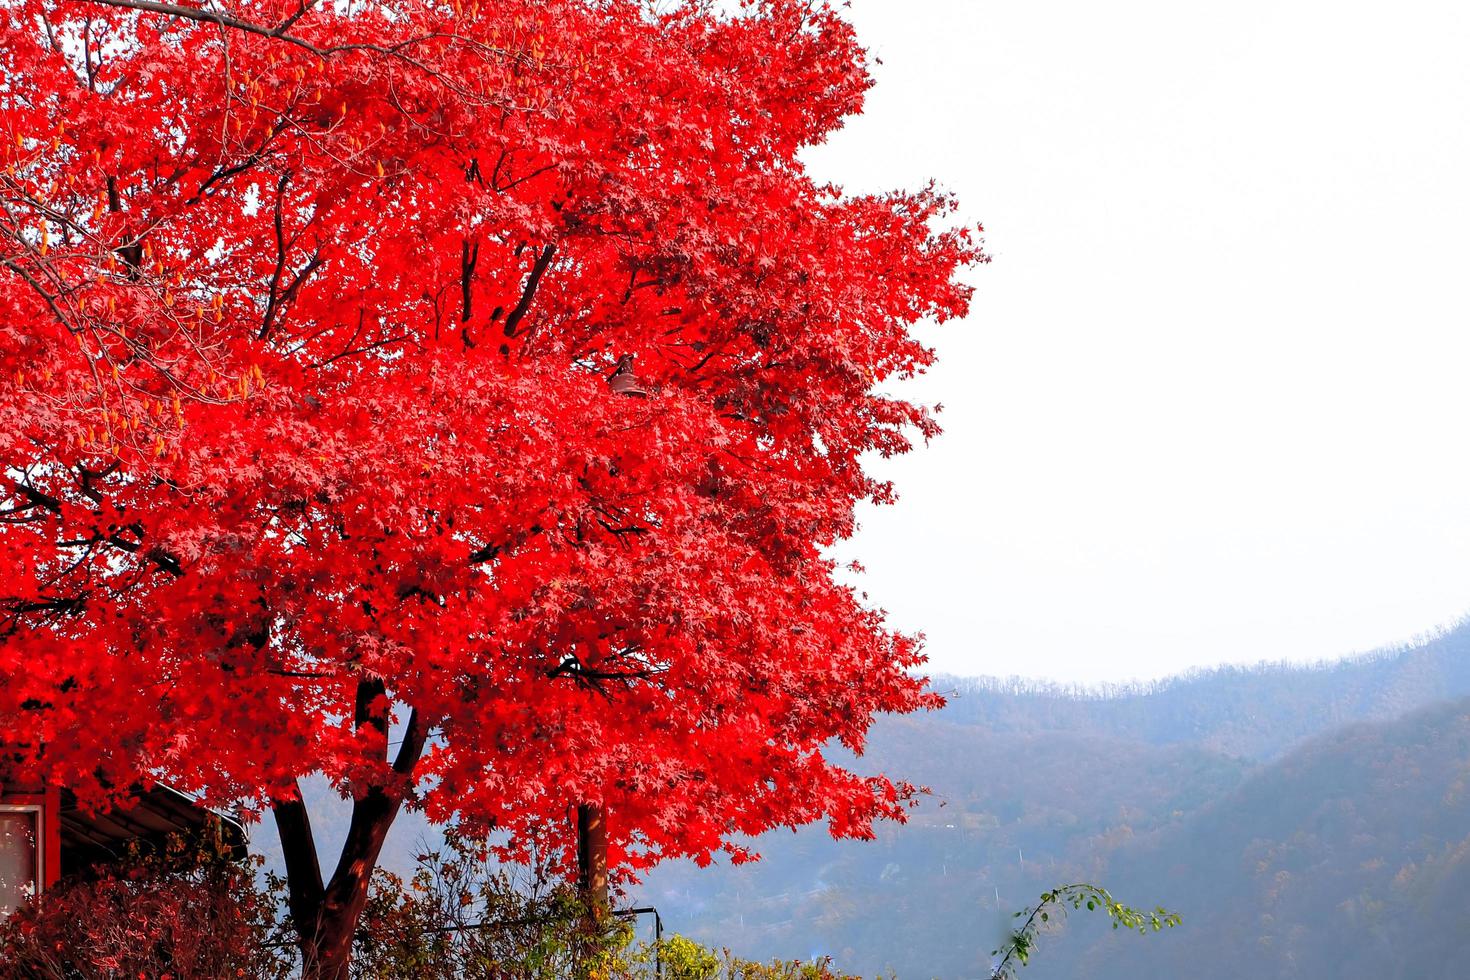 Red maple leaves tree in autumn season on the island of Nami,South Korea photo